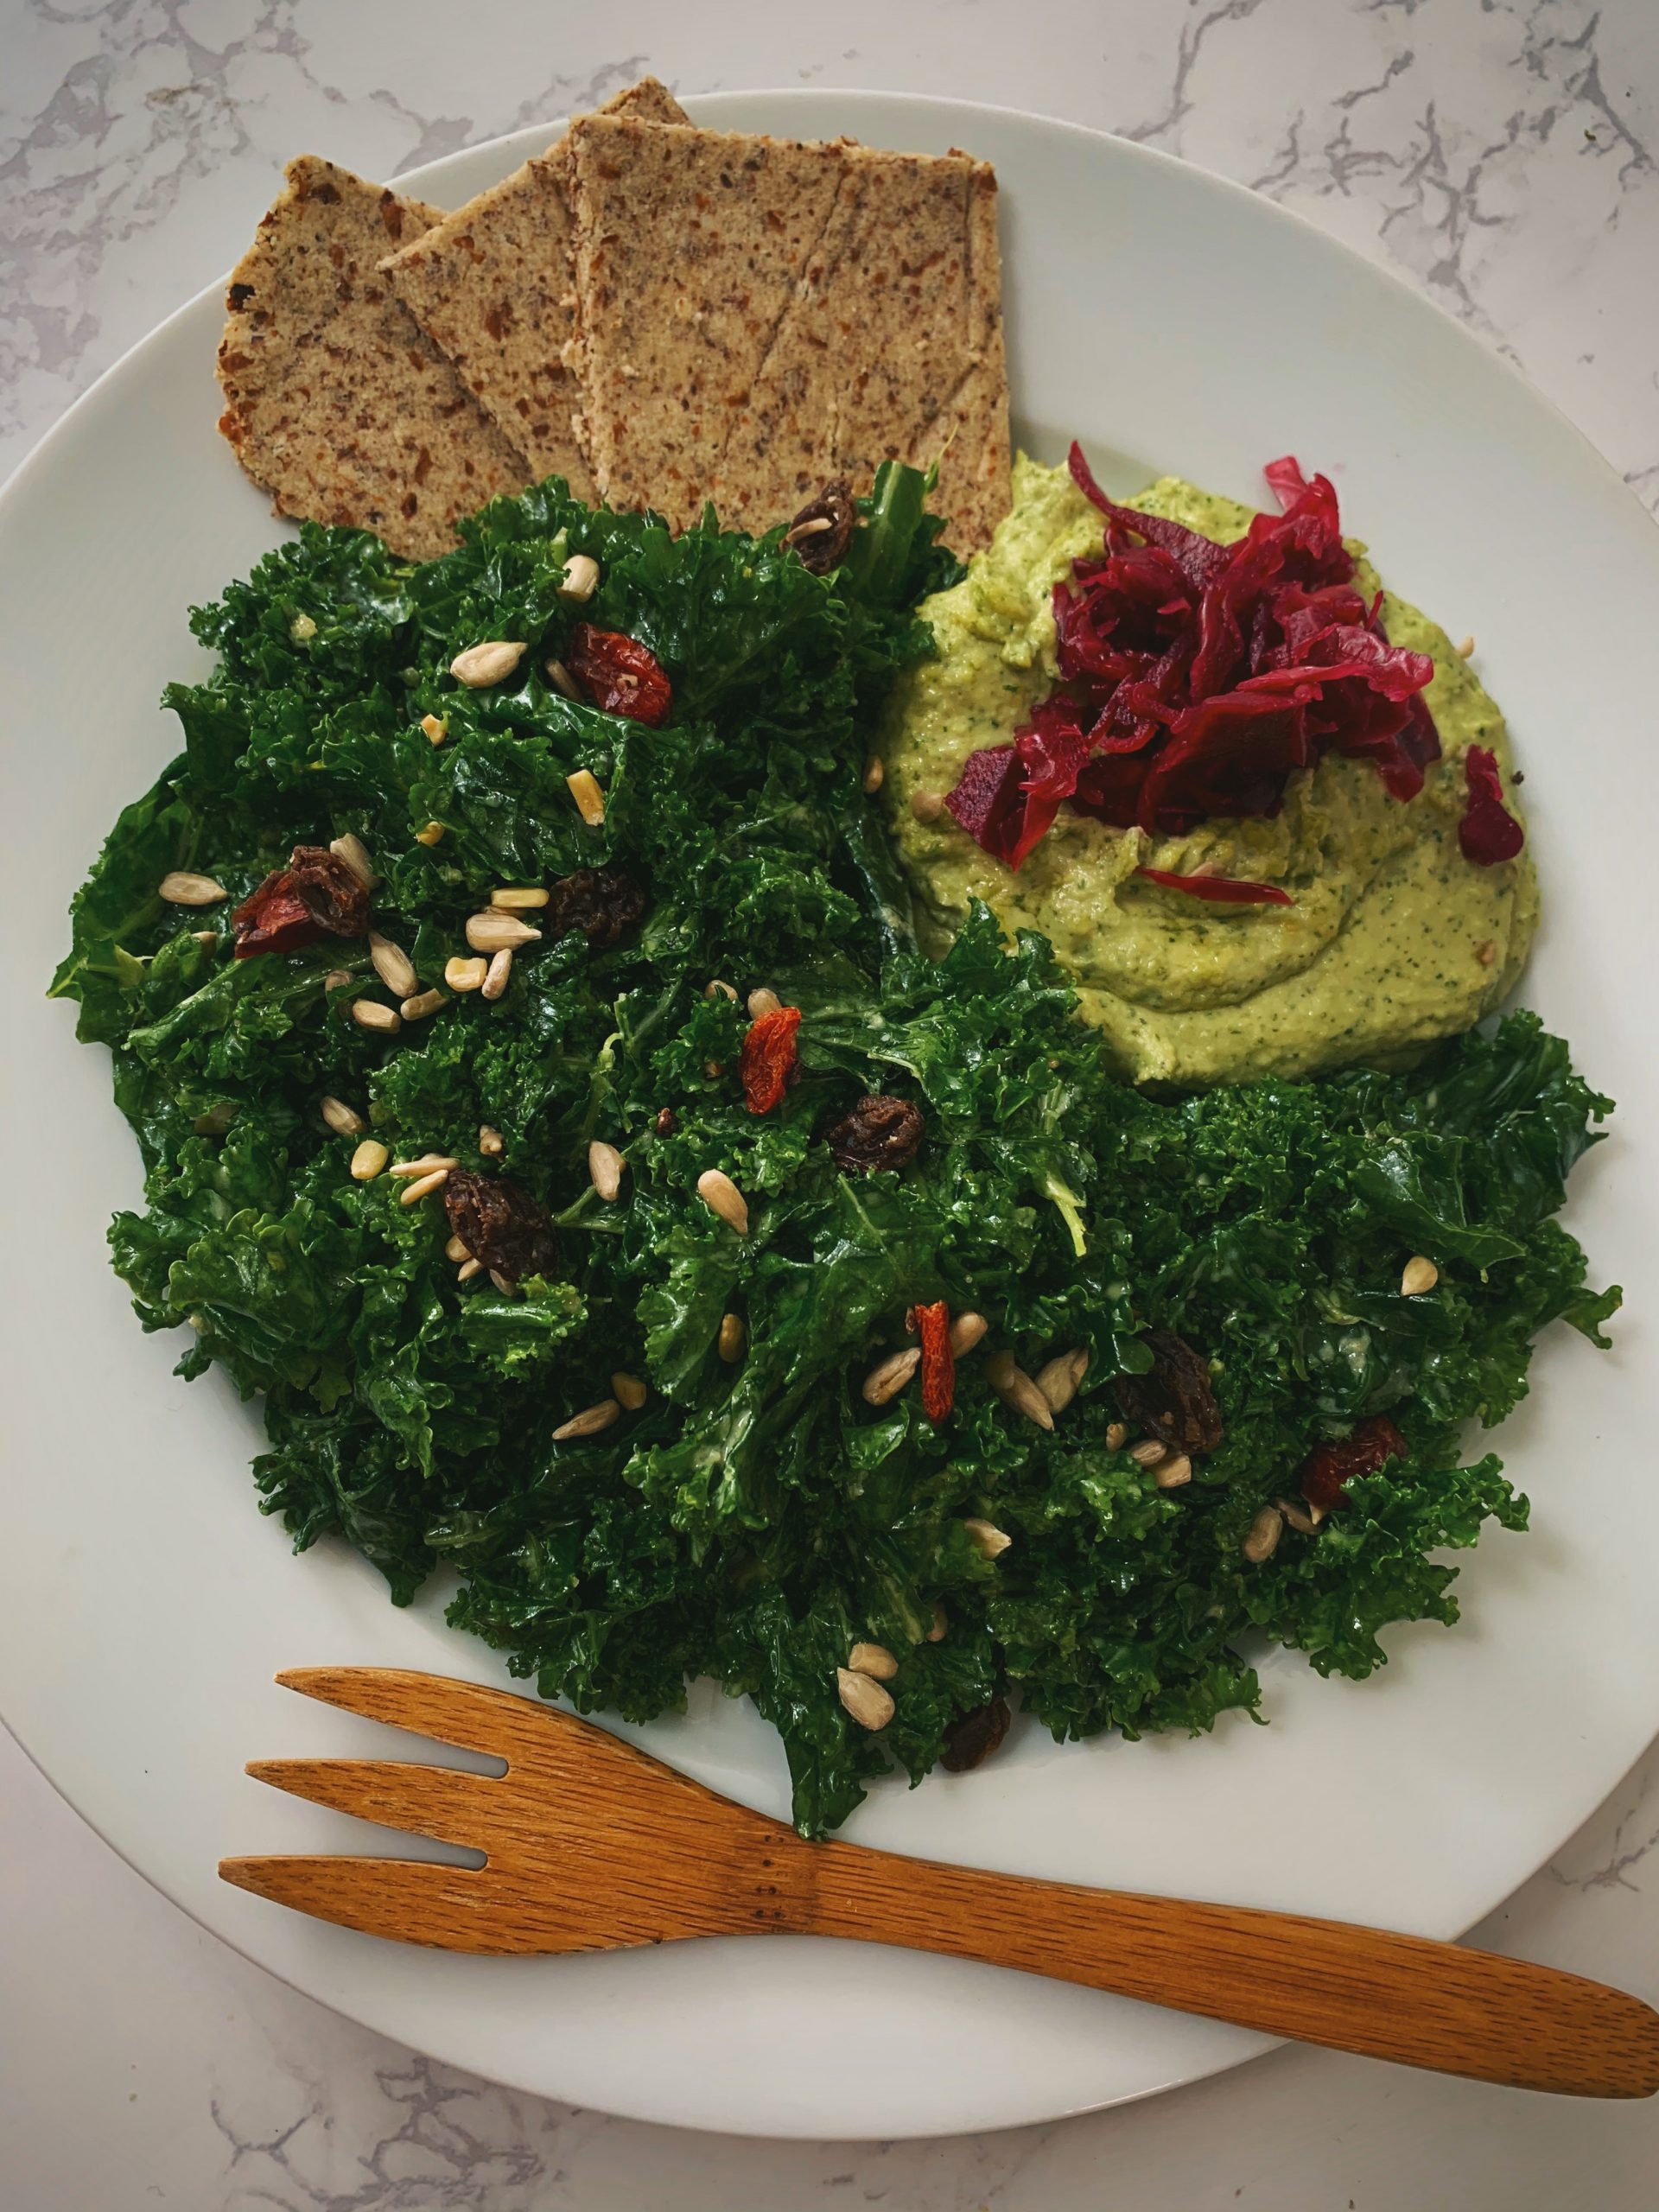 Massaged Kale Salad with side of Cilantro Pepita Hummus recipe courtesy of That Green Lyfe